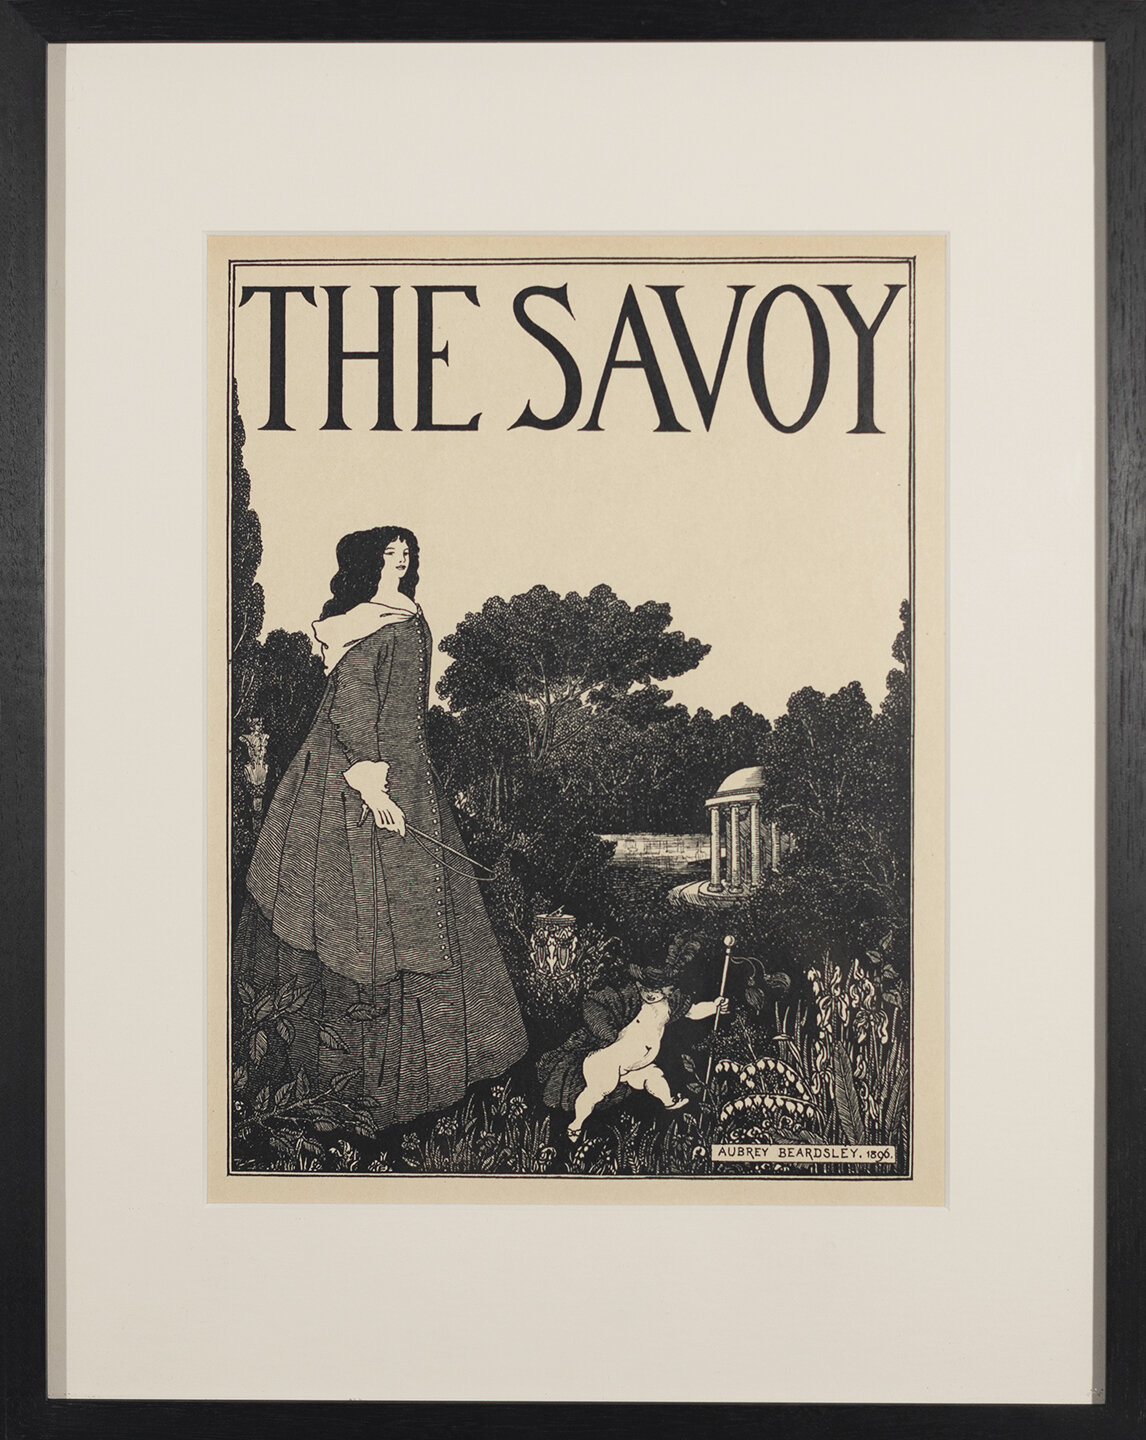 Aubrey Beardsley, cover design for No. 1 of "The Savoy."